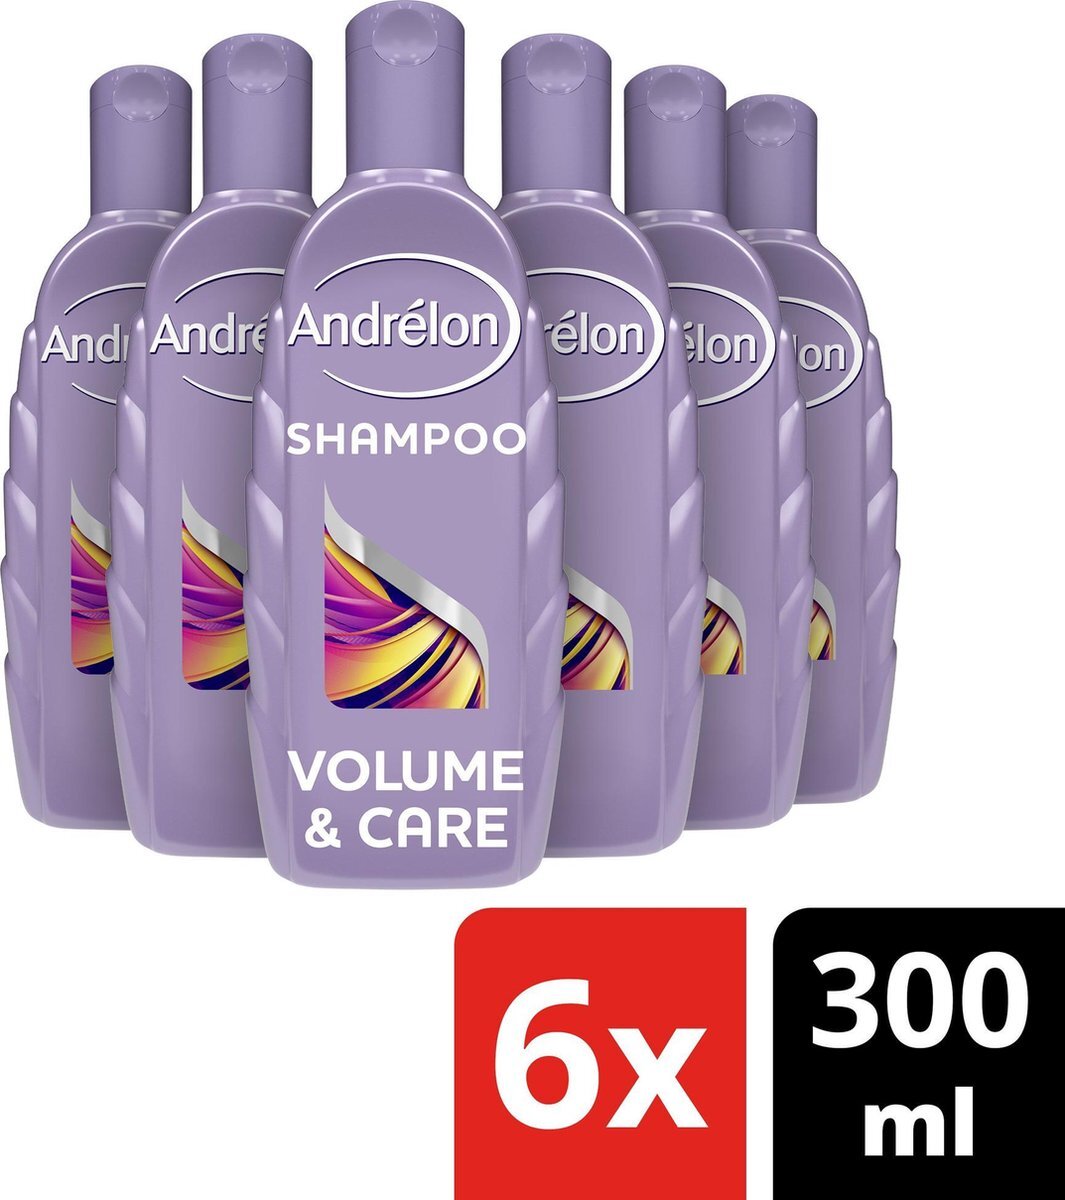 AndrÃ©lon Andrelon Shampoo Volume&Care 300ML 6x